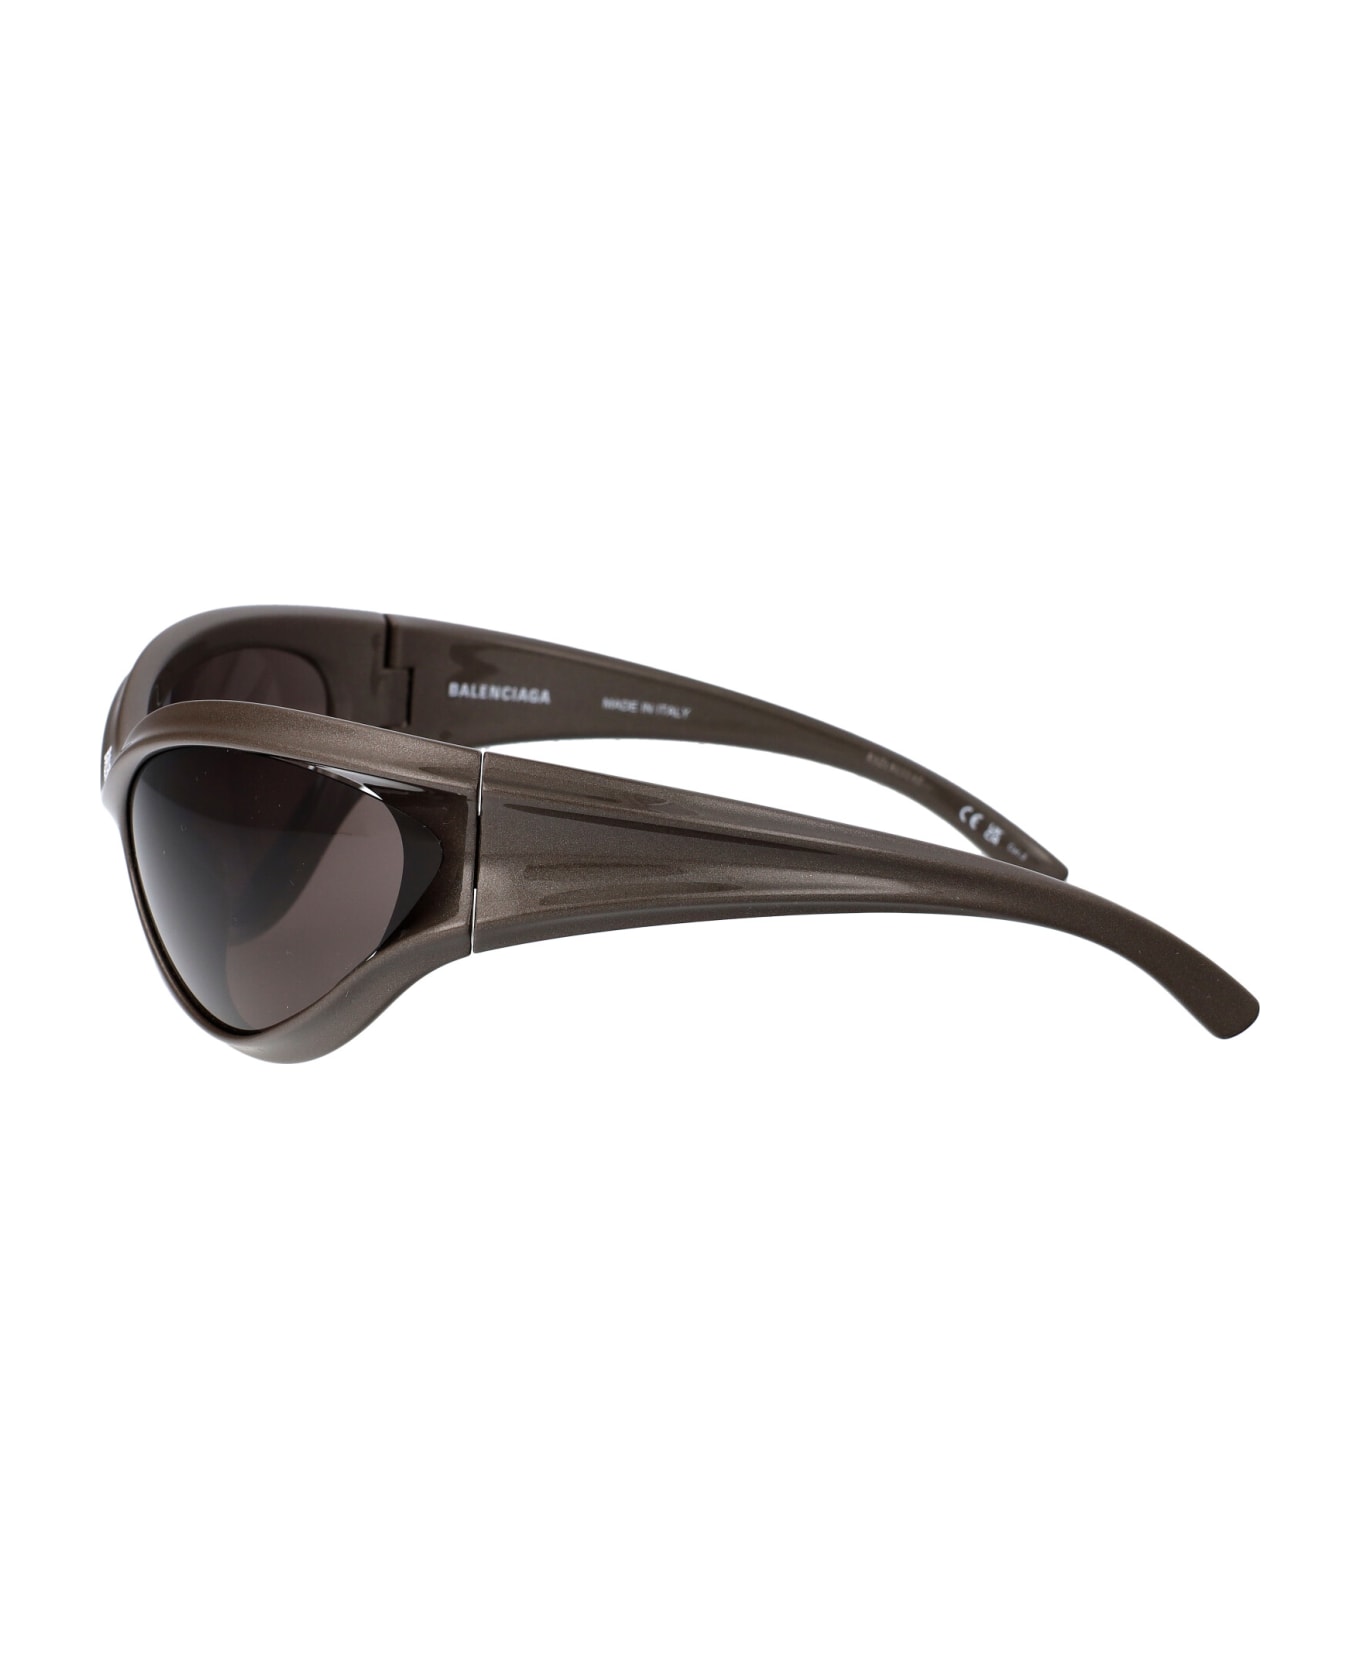 Balenciaga Eyewear Bb0317s Sunglasses - 003 GREY GREY GREY